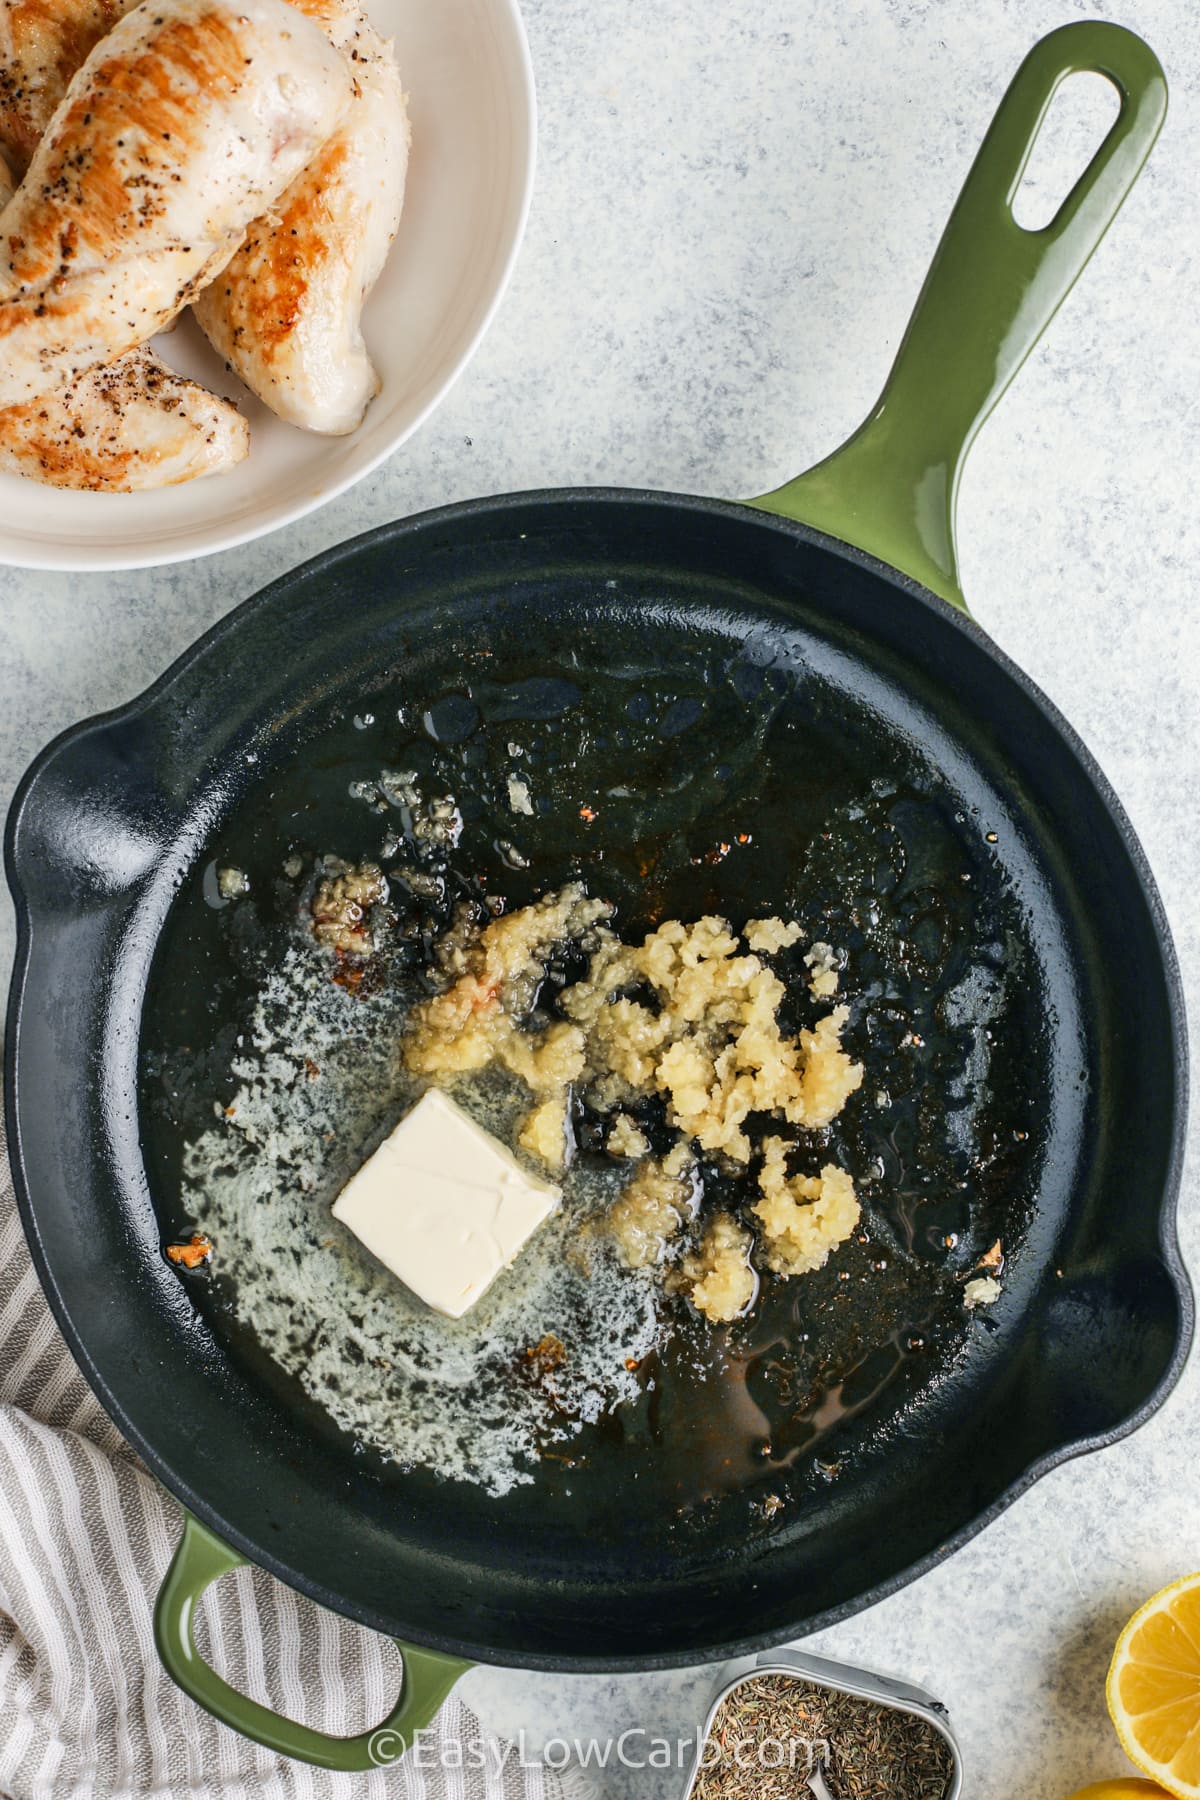 butter and garlic cooking in a pan to make Lemon Garlic Chicken